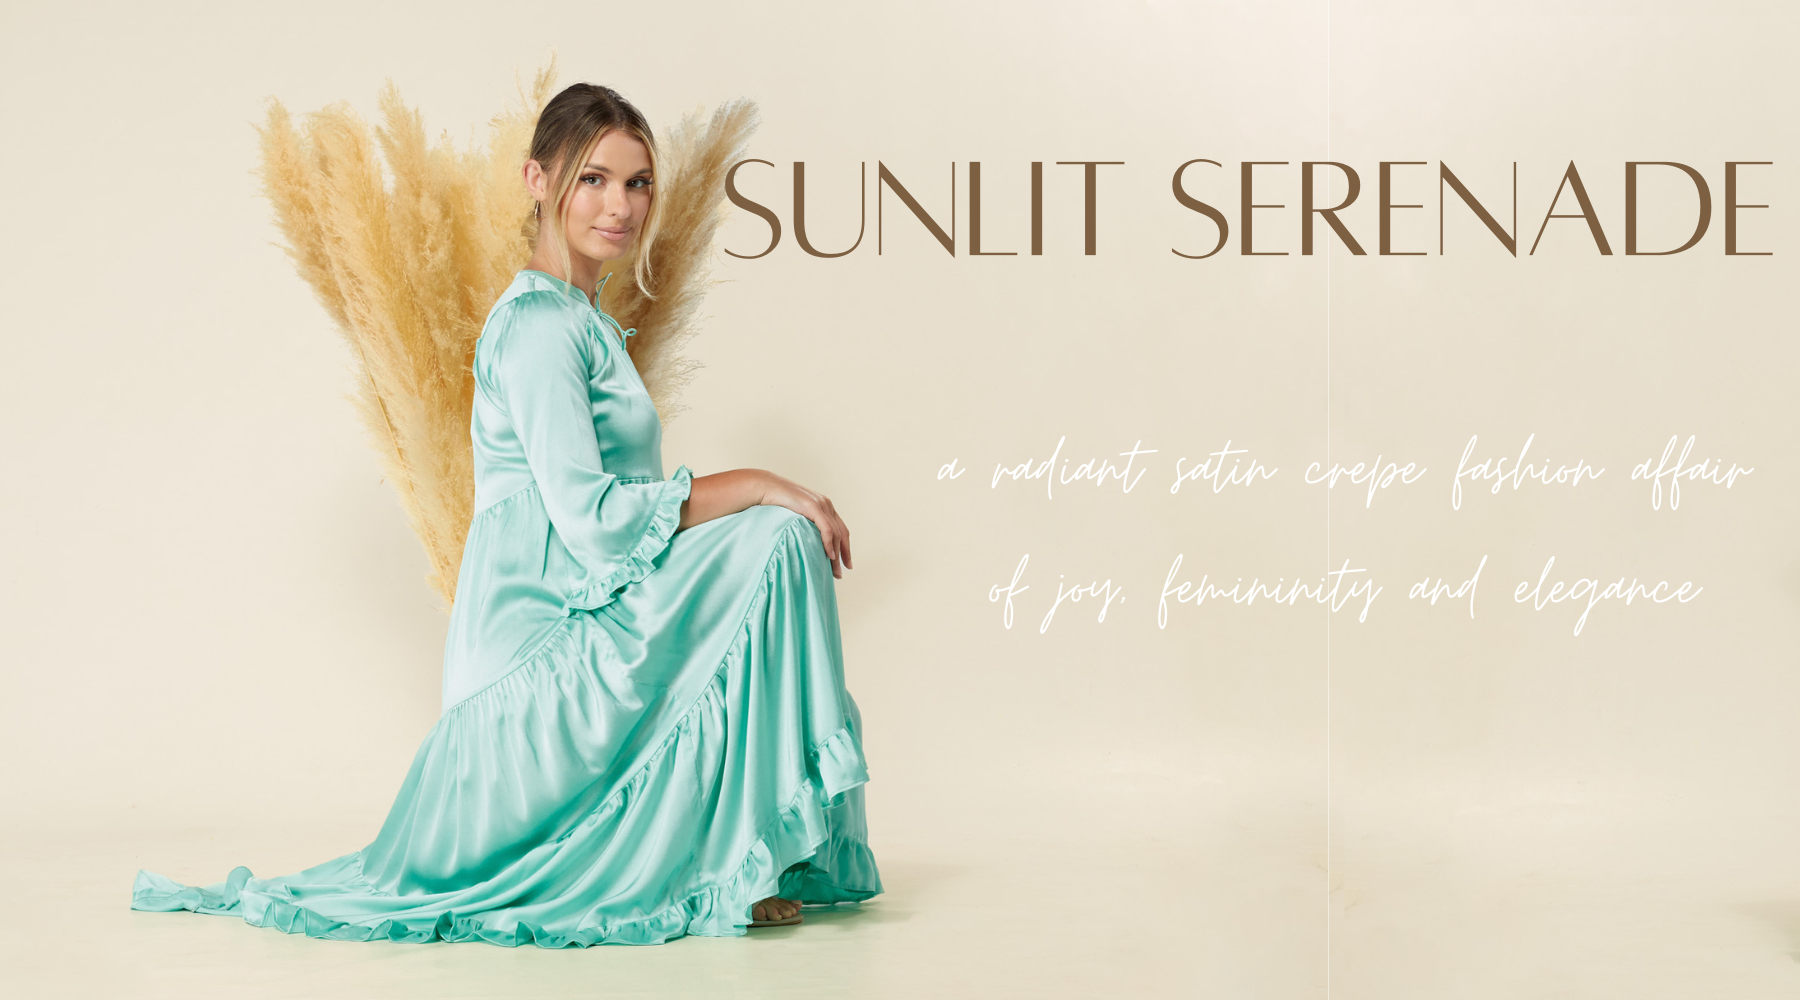 Sunlit Serenade: A Radiant Satin Crepe Fashion Affair